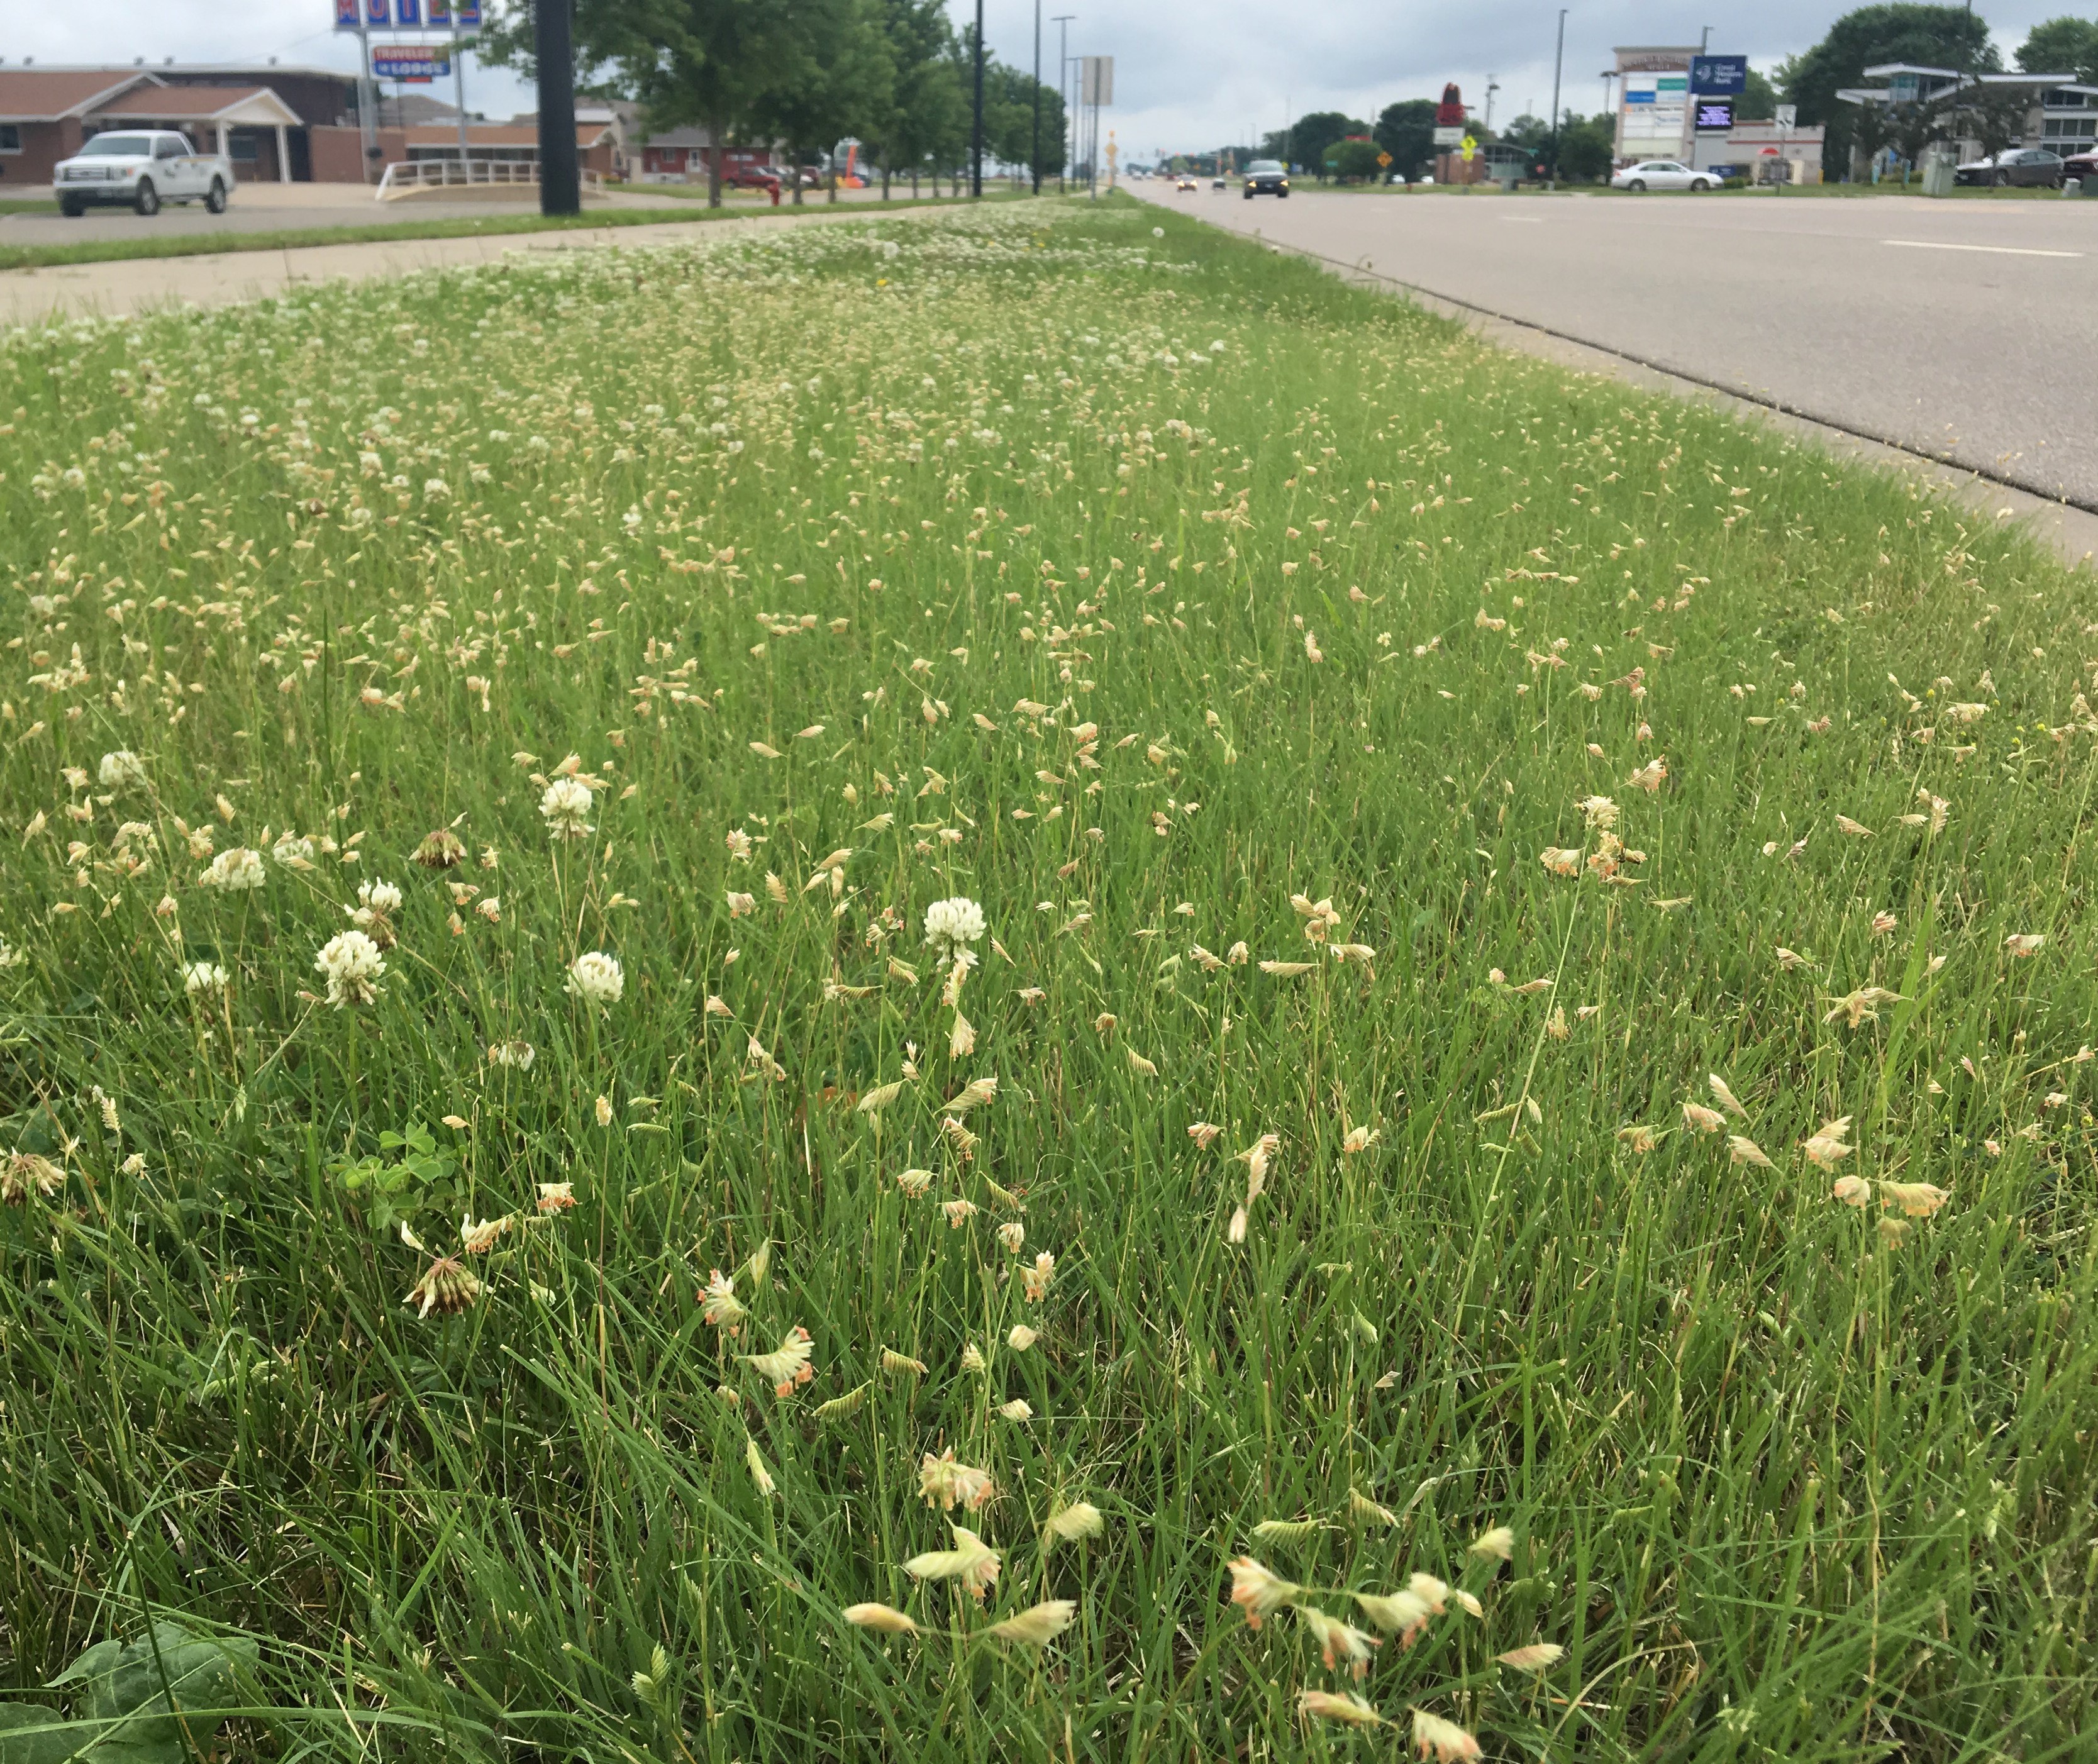 Buffalograss growing alongside a road